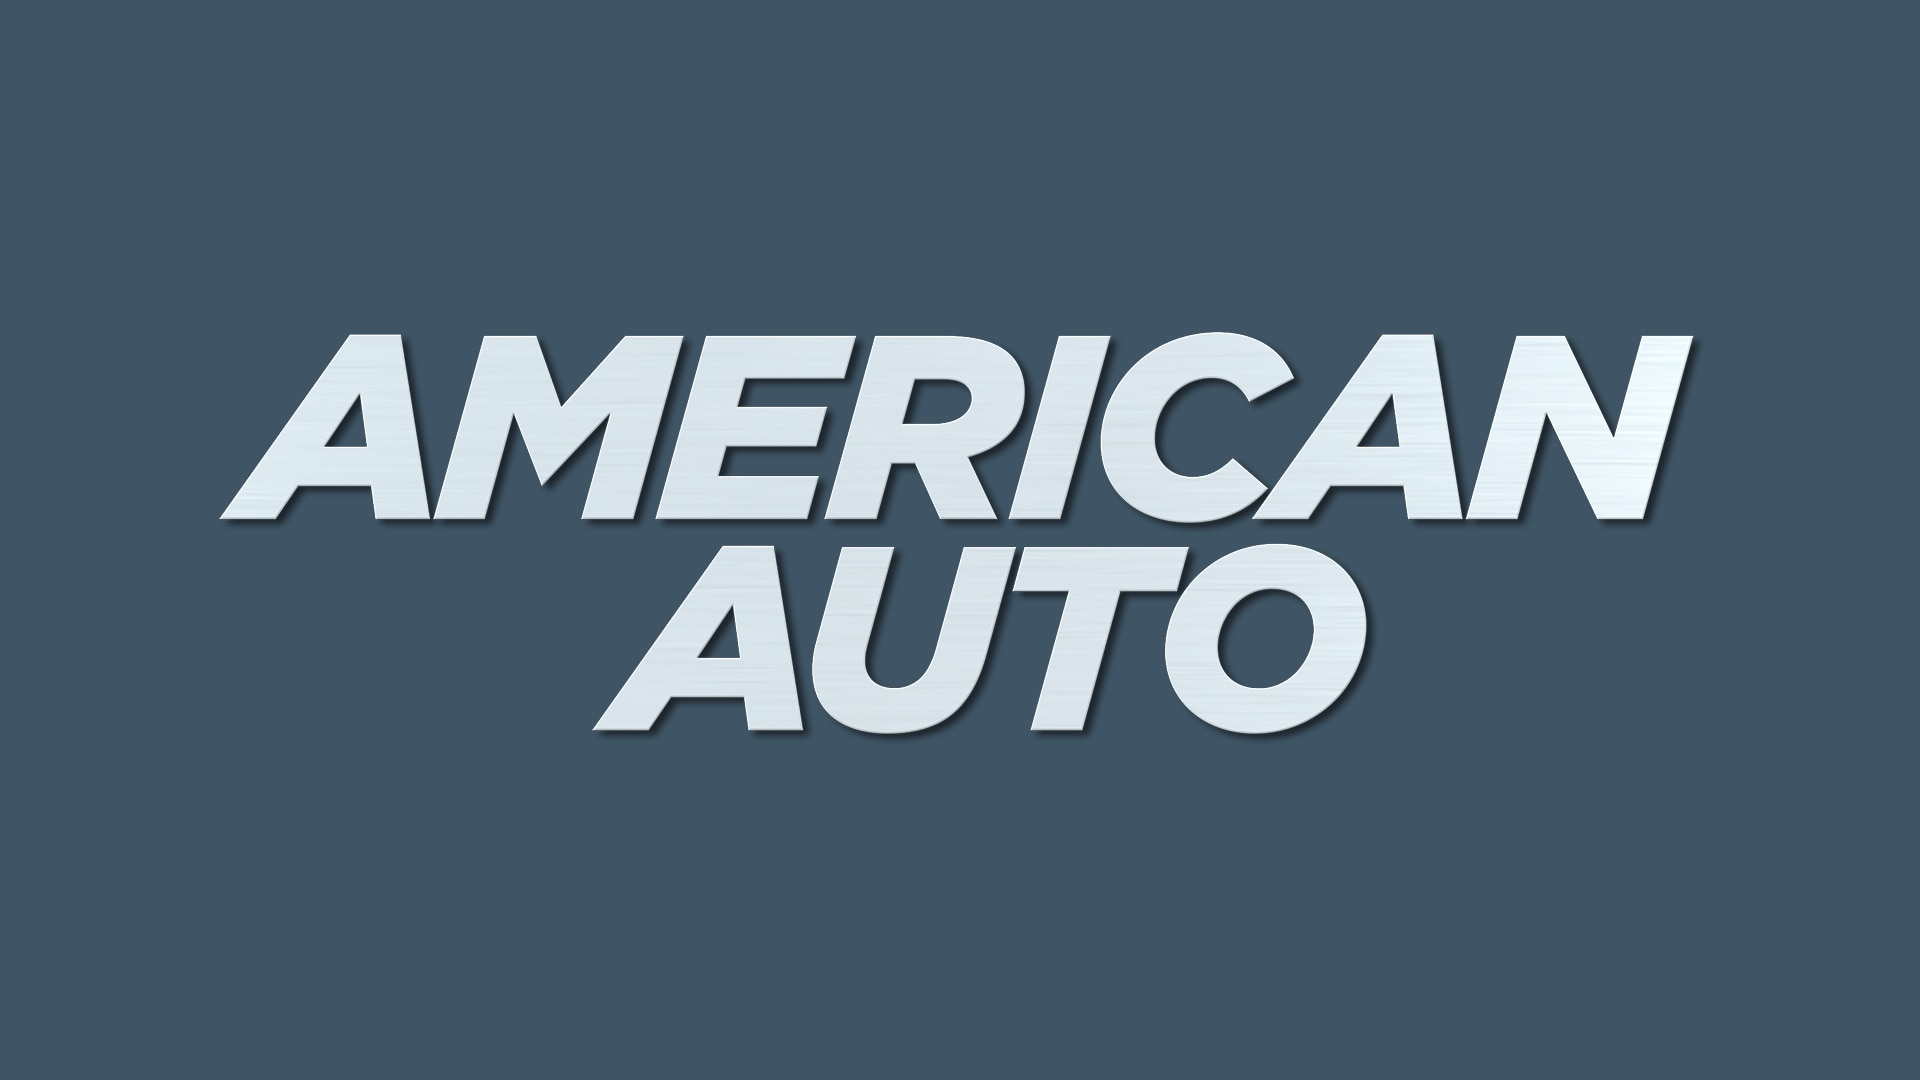 American Auto - NBC Series